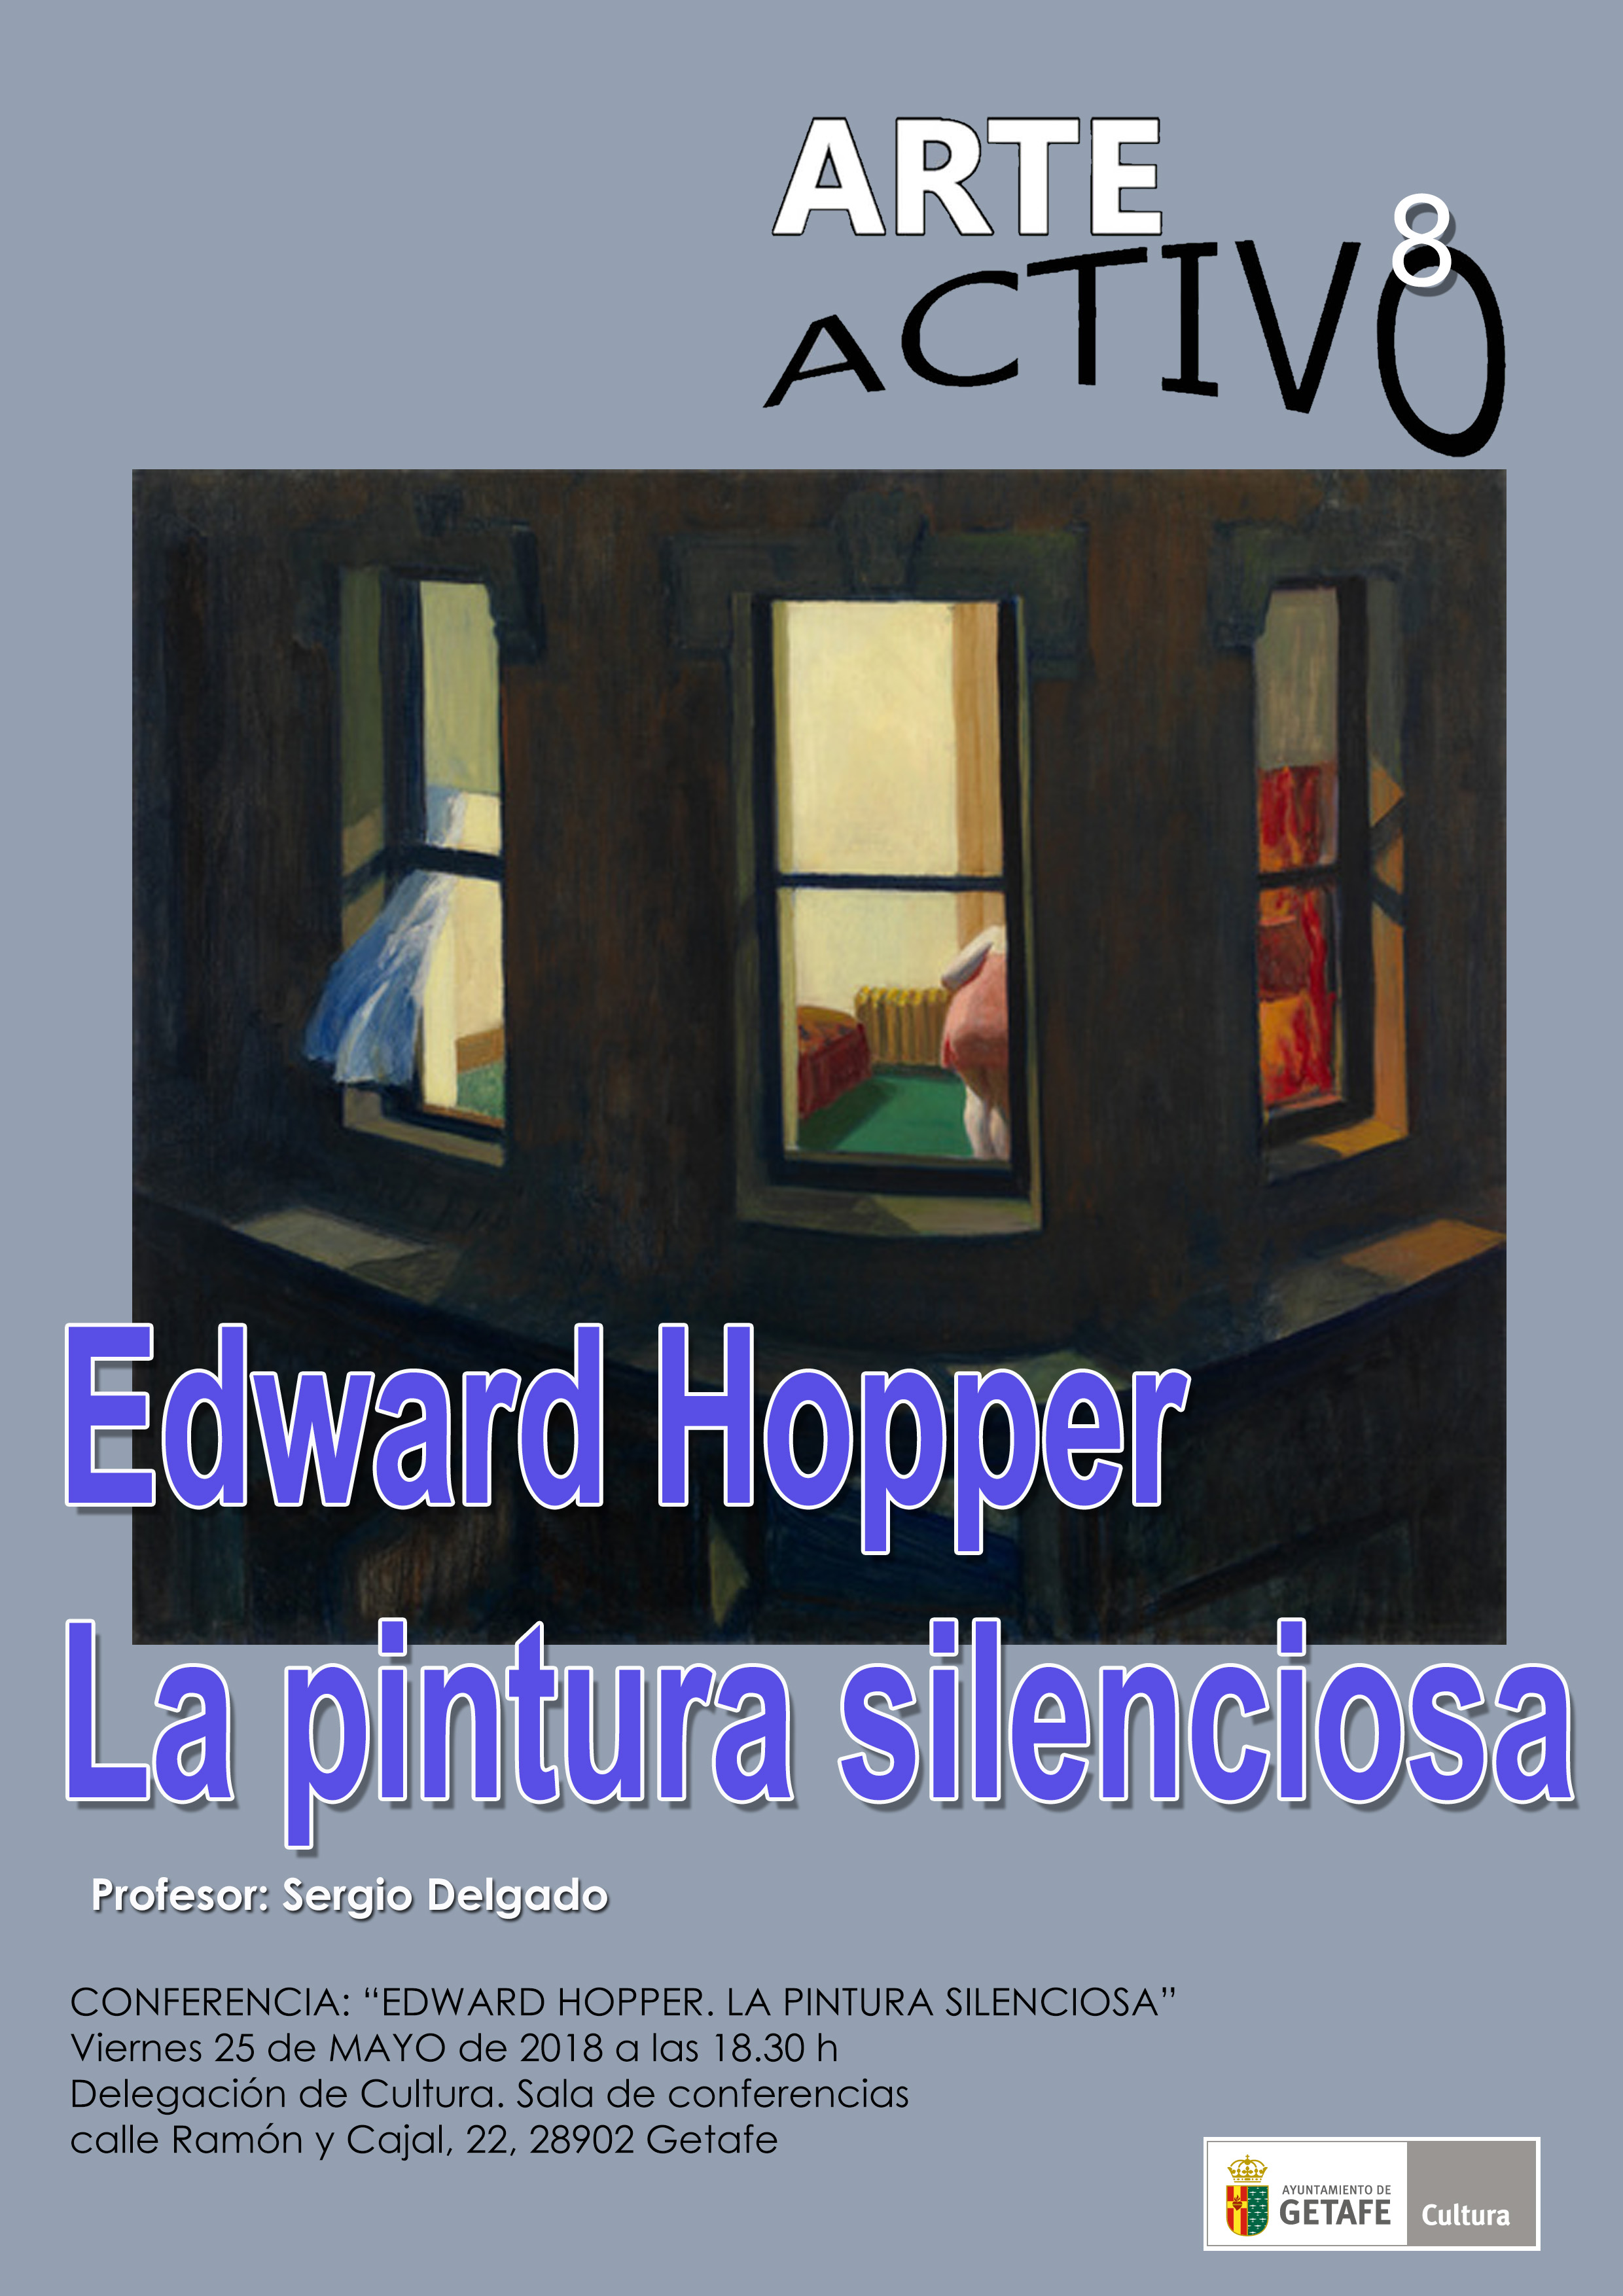 Conferencia “Edward Hopper. La pintura silenciosa”